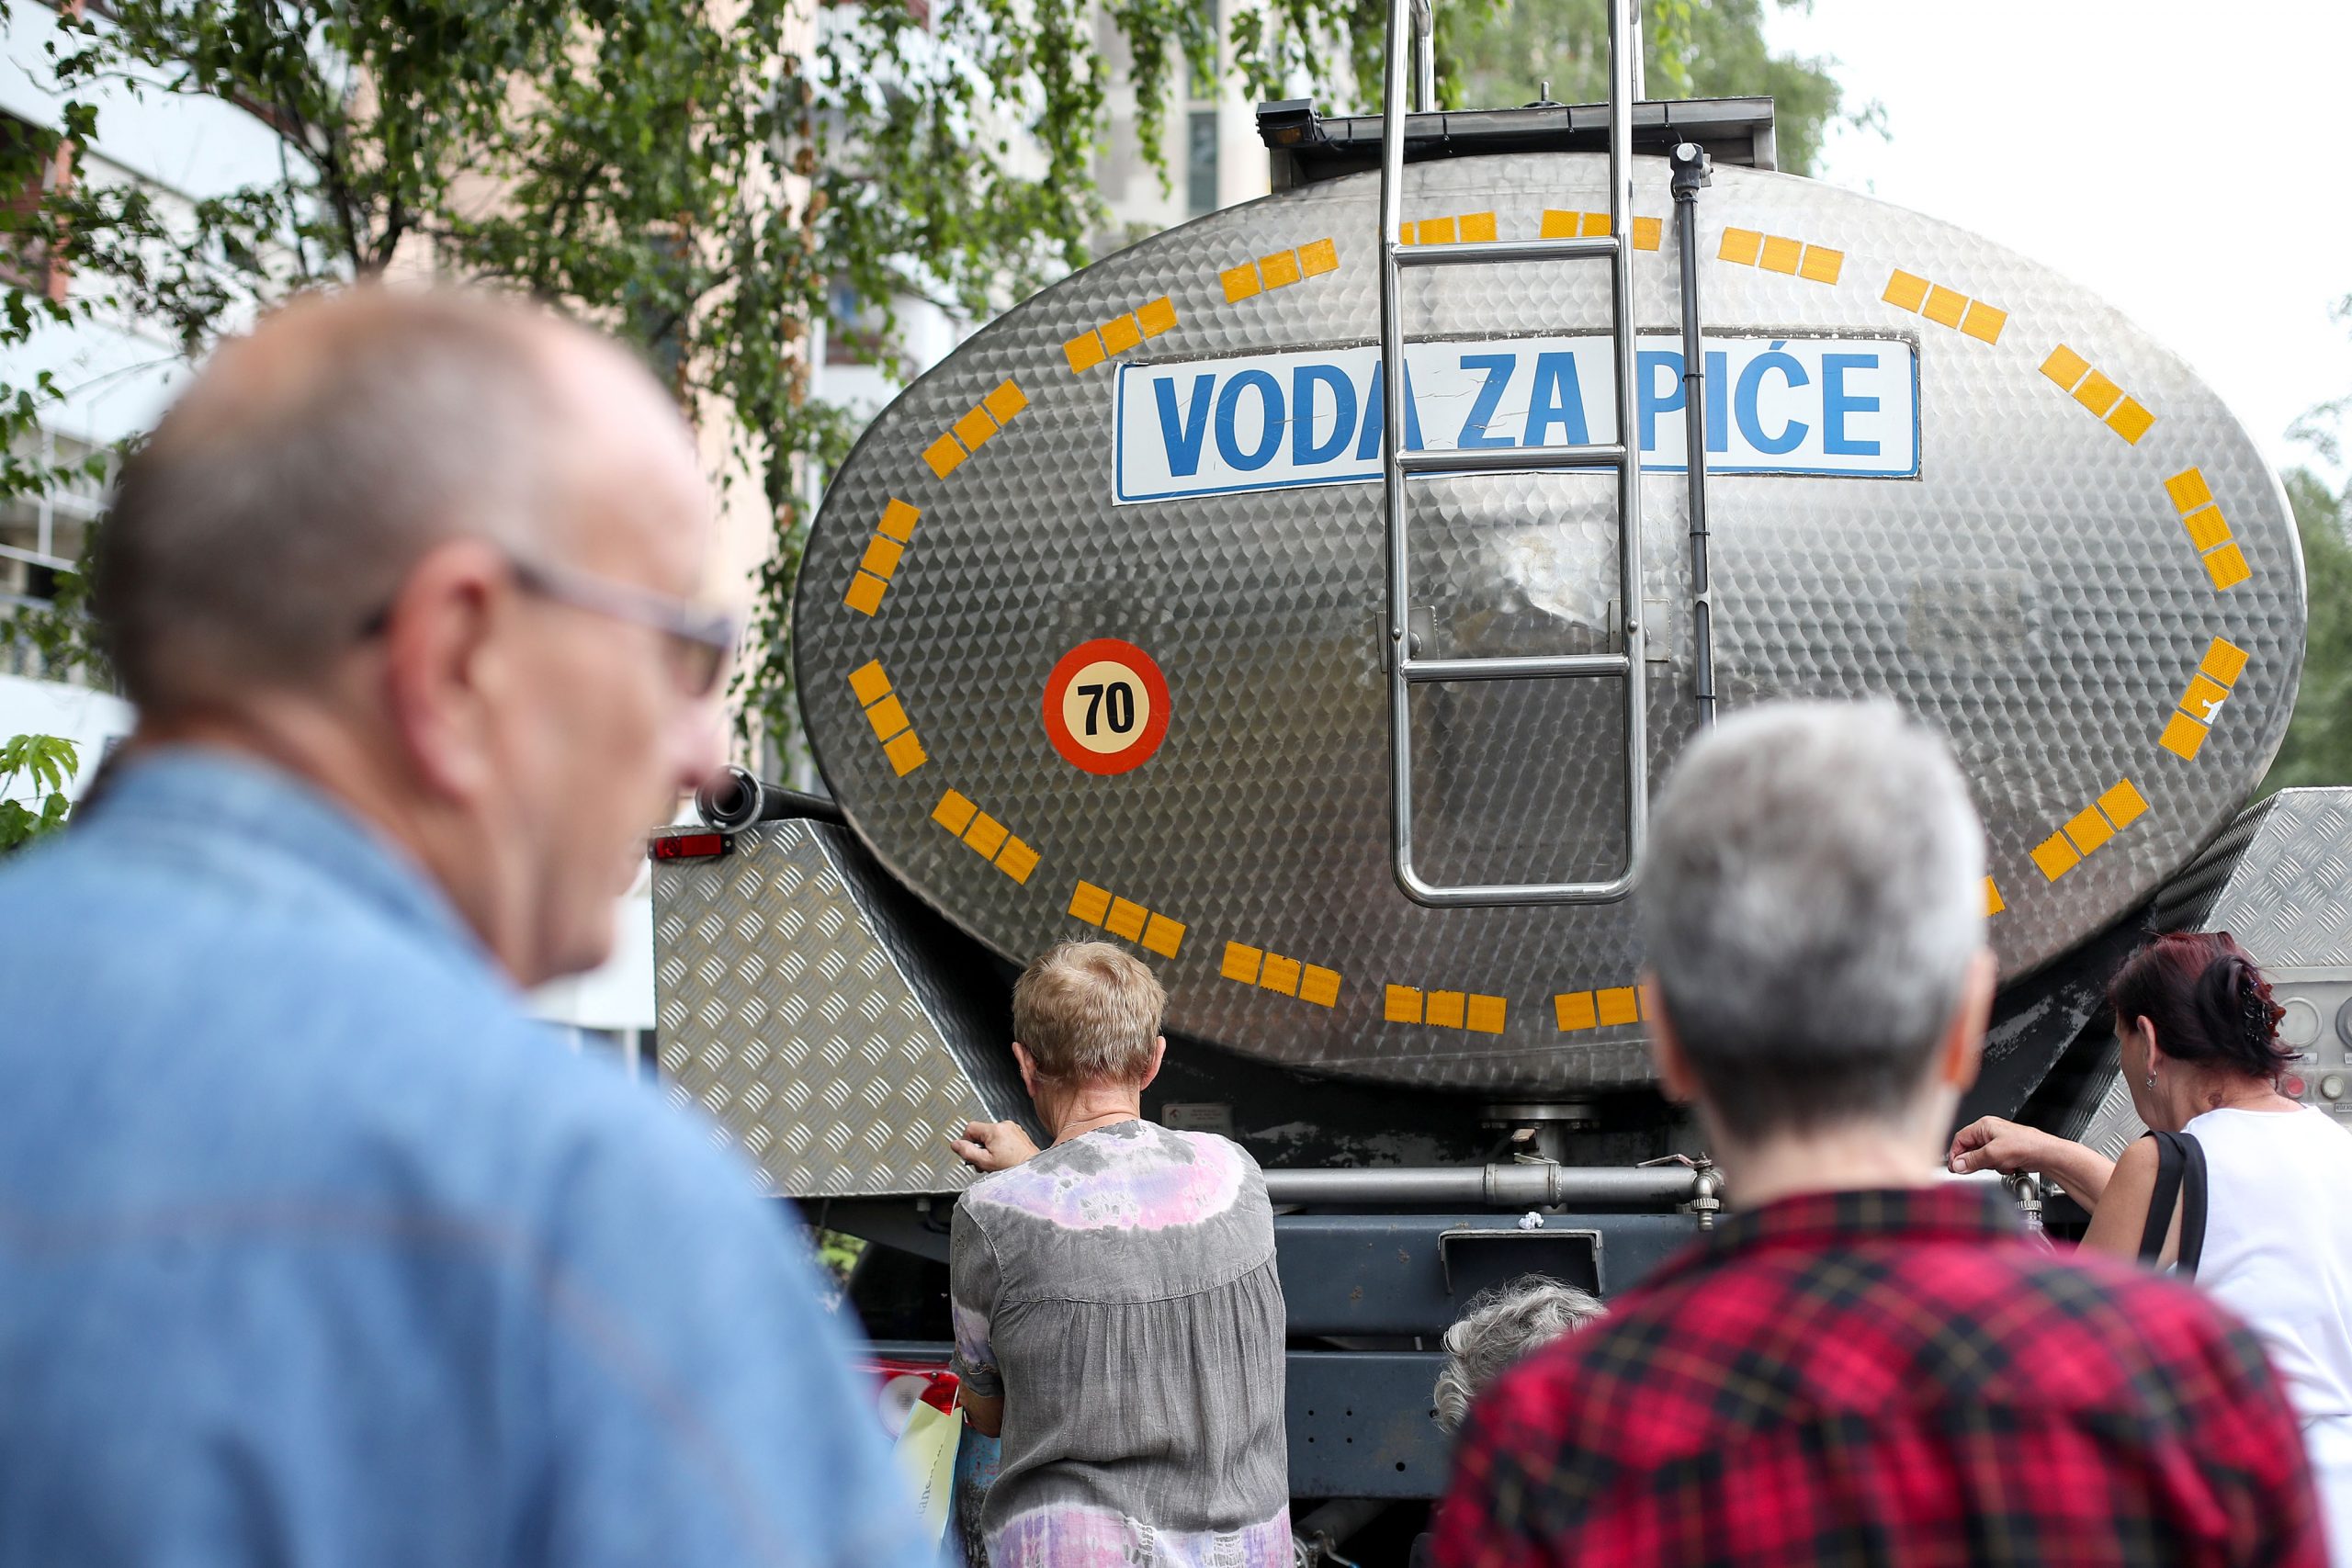 09.07.2019., Zagreb - Cisterna sa vodom u Novom Zagrebu koja opskrbljuje gradjane pitkom vodom.
Photo: Igor Kralj/PIXSELL